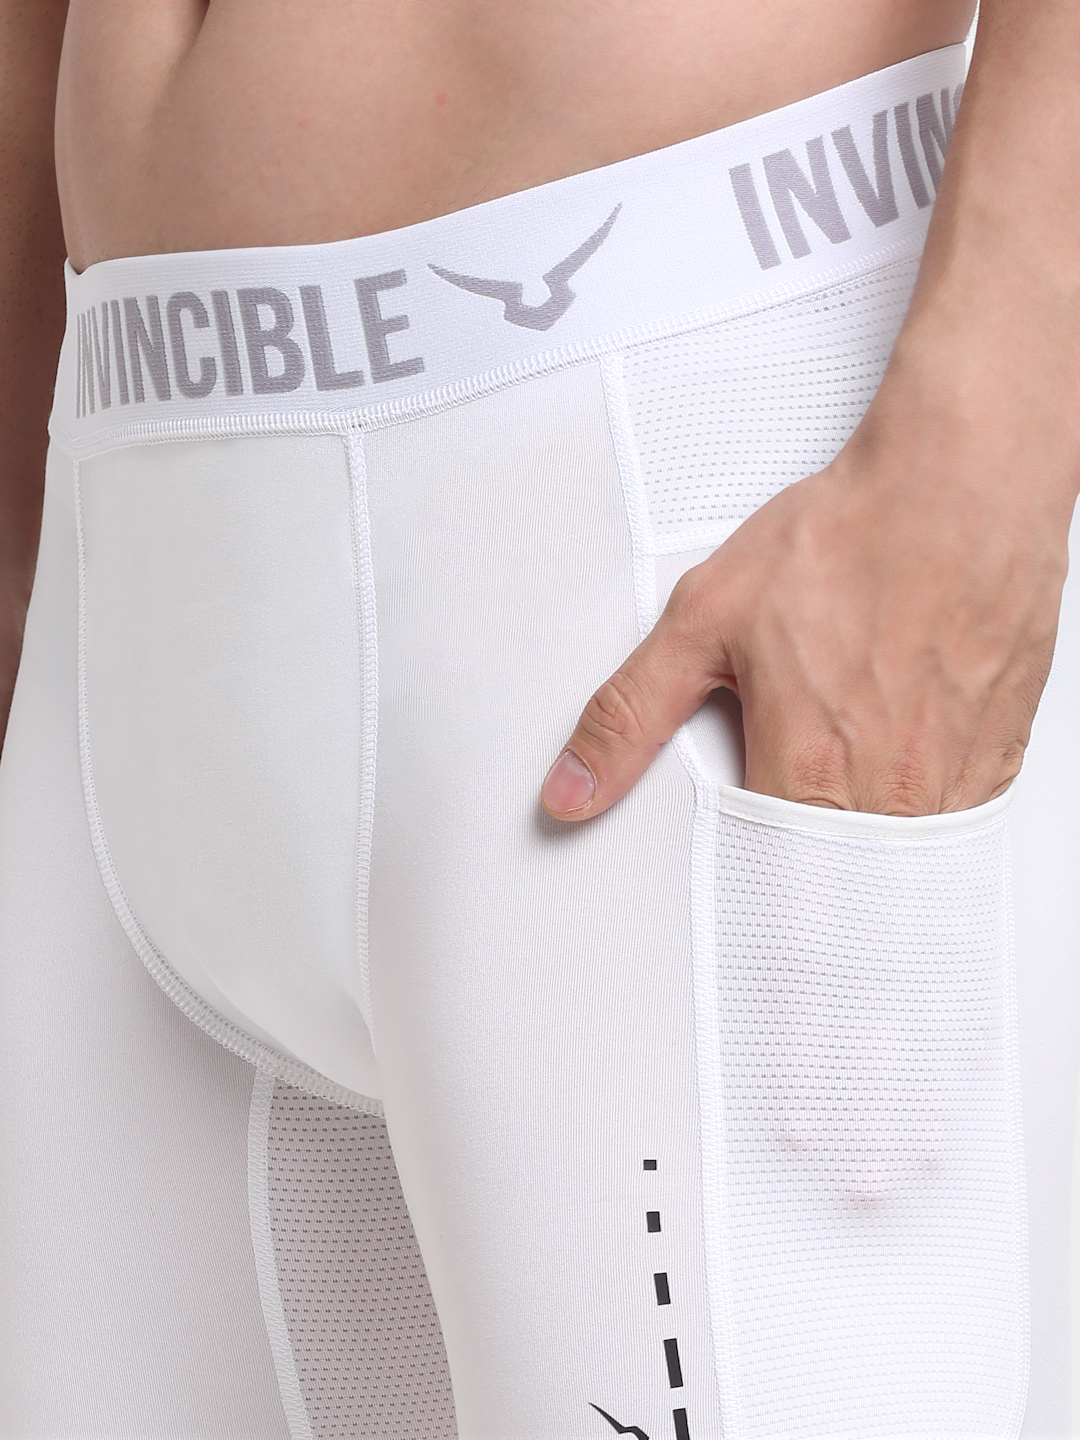 Invincible Men's Ghost Compression Shorts